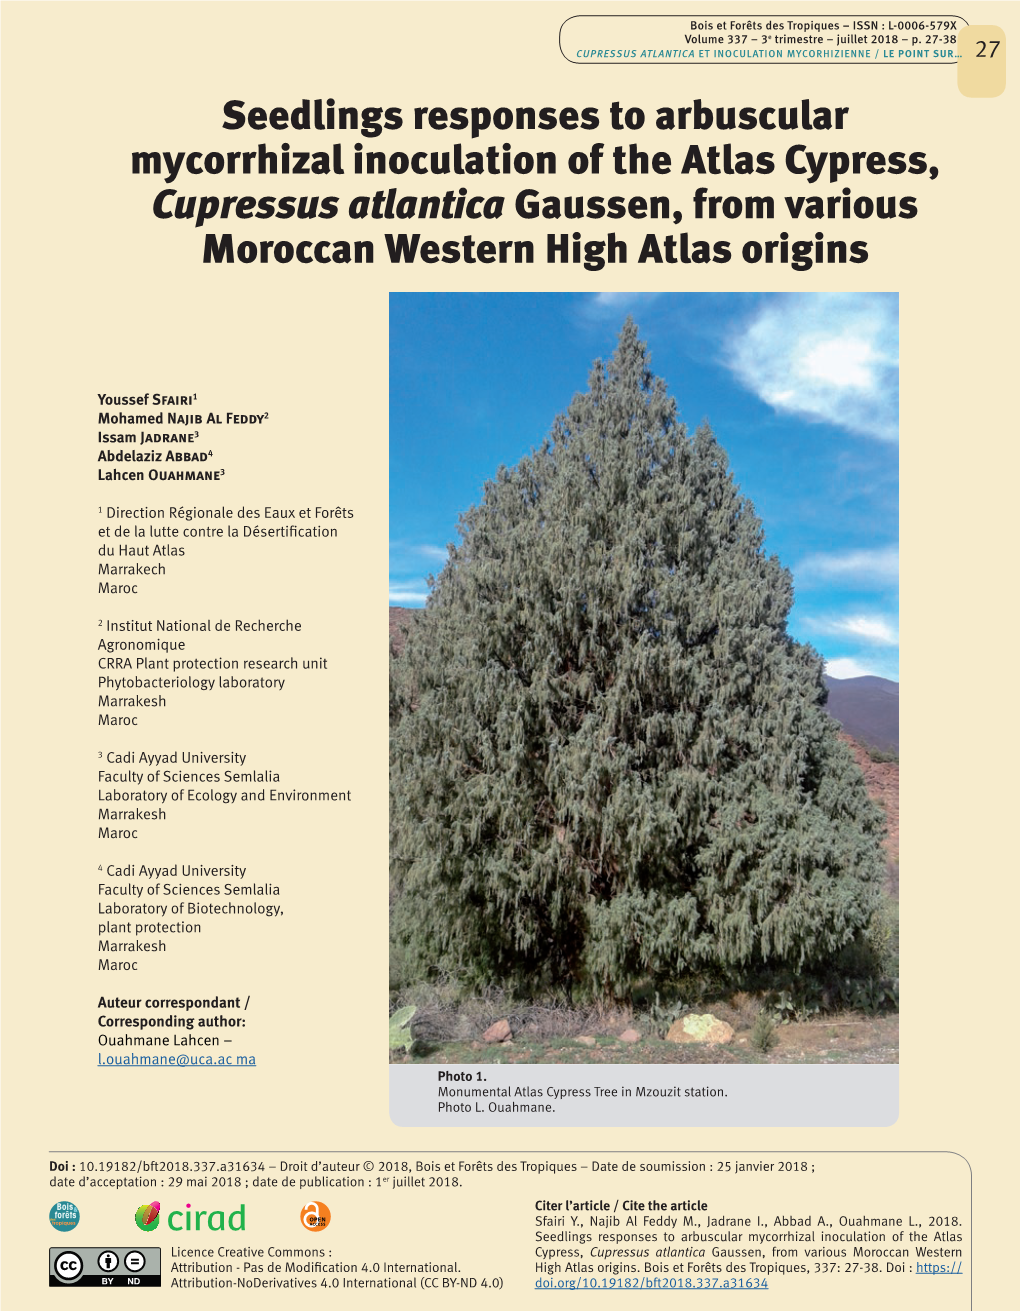 Seedlings Responses to Arbuscular Mycorrhizal Inoculation of the Atlas Cypress, Cupressus Atlantica Gaussen, from Various Moroccan Western High Atlas Origins